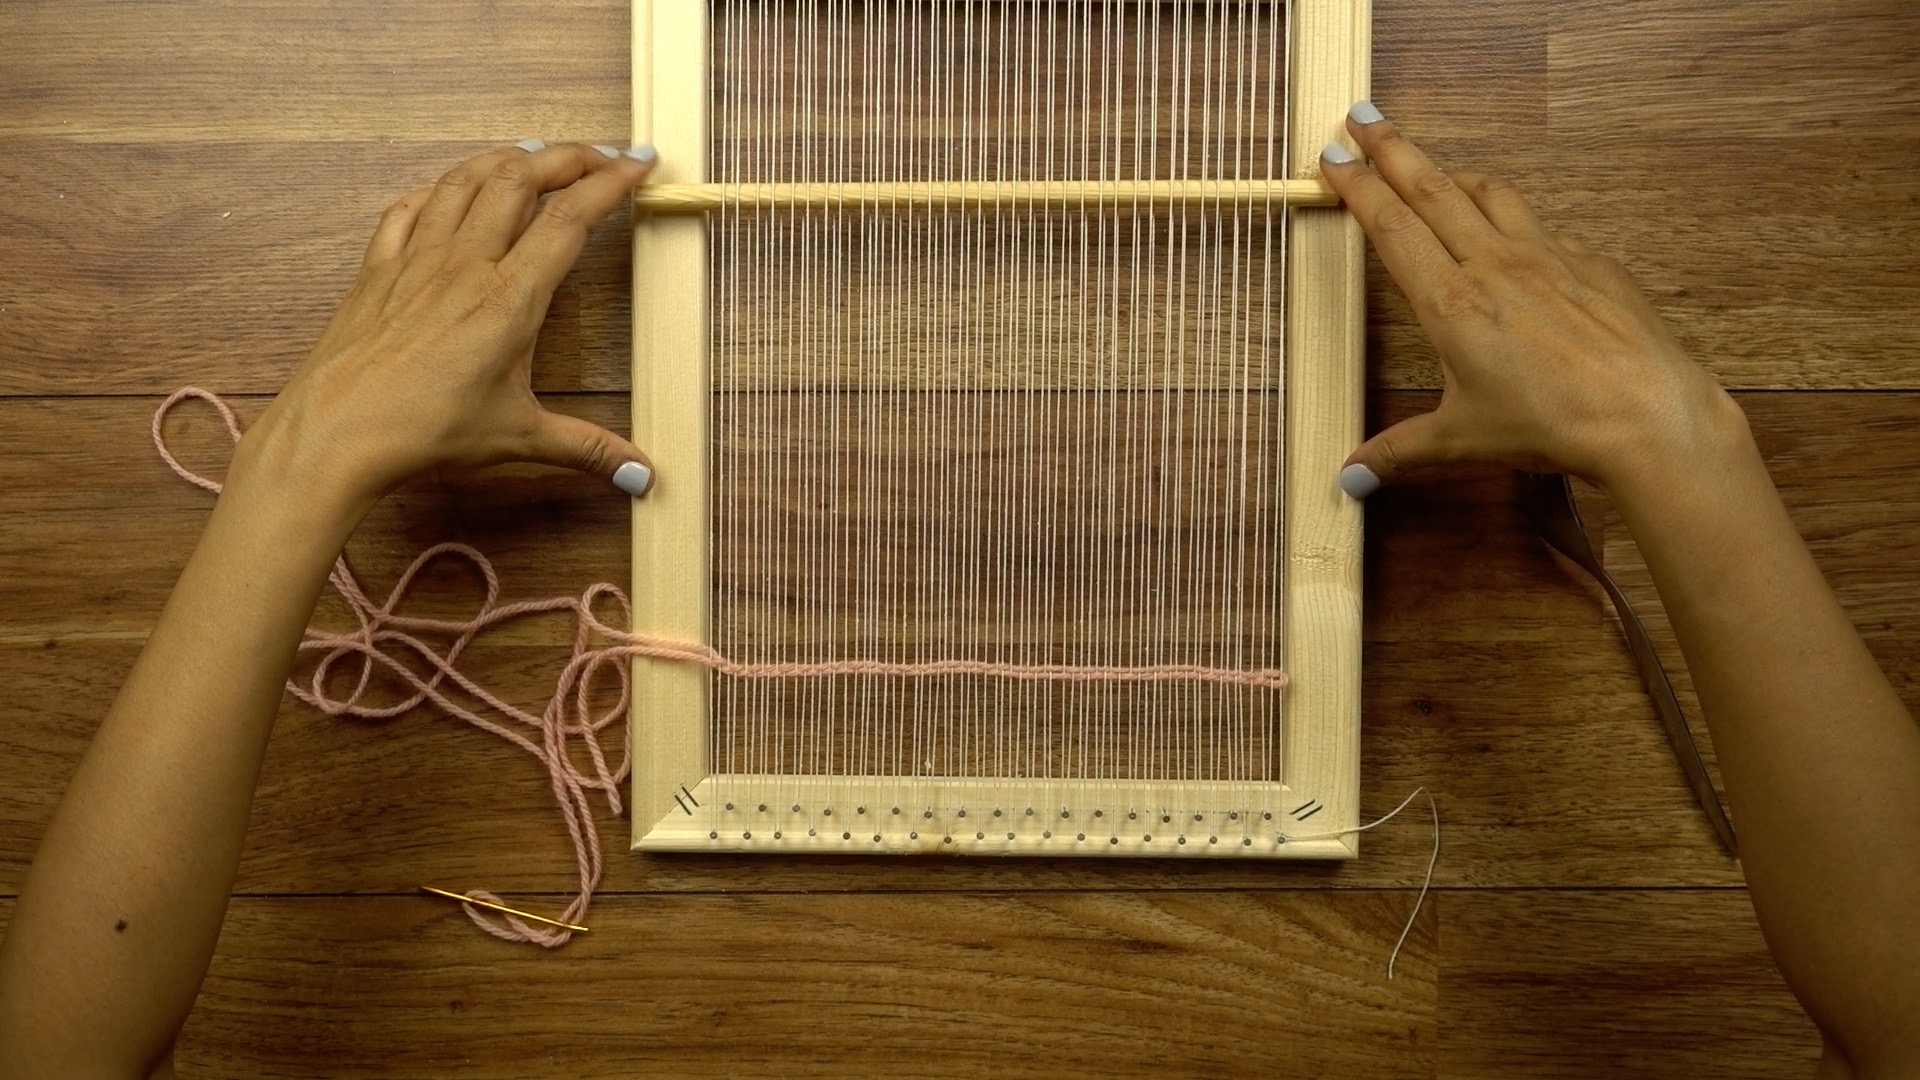 The Loom: How to Make a Weaving Loom — SIMPLY HANDMADE STUDIOS